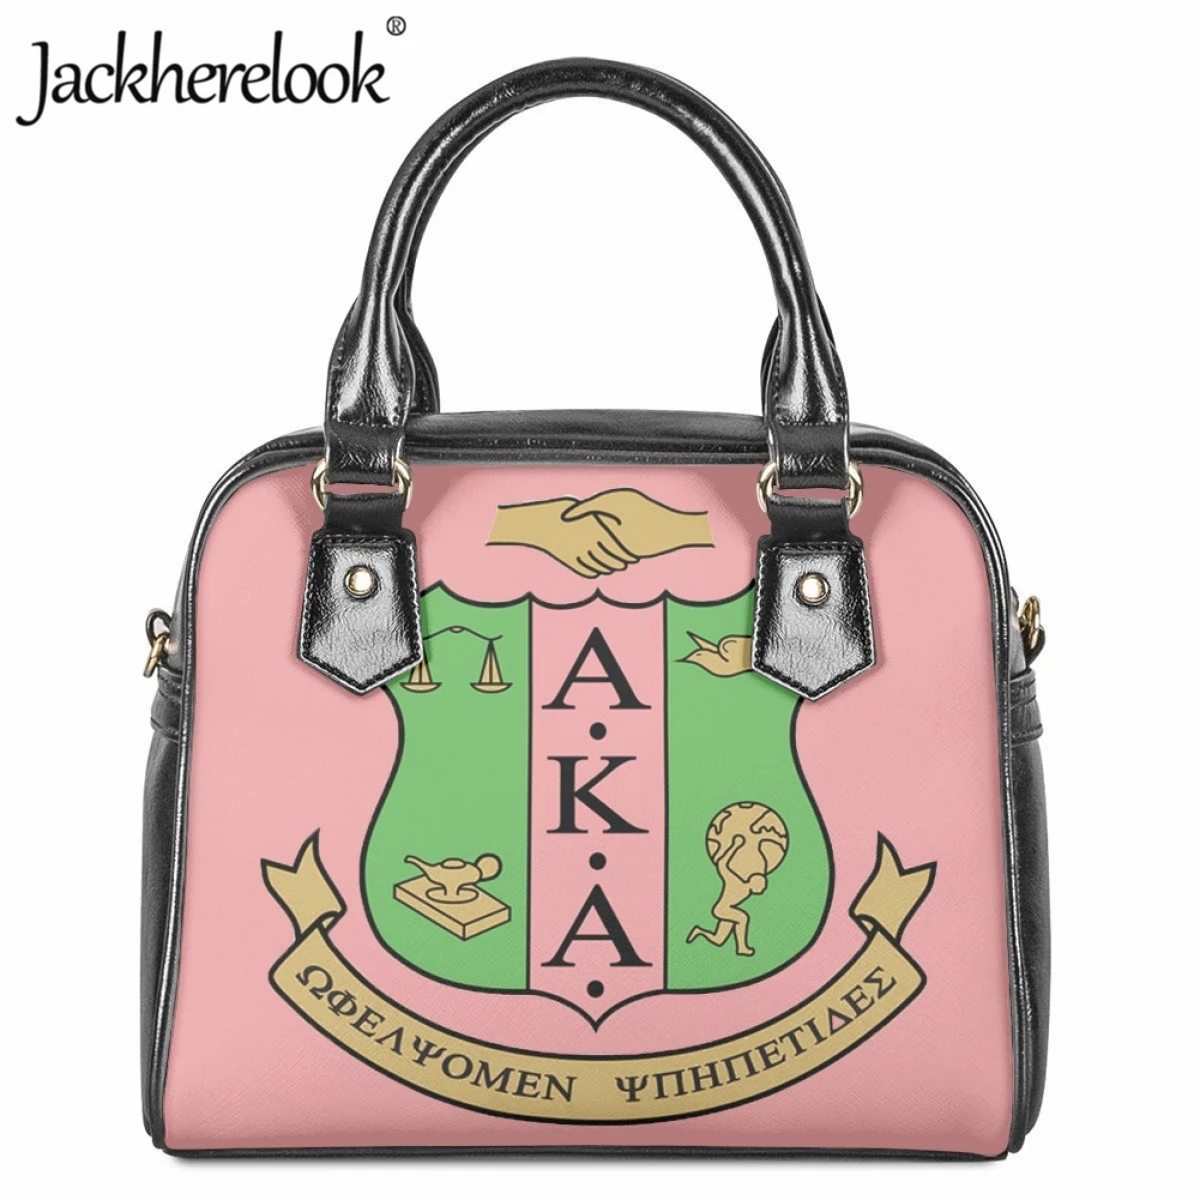 

Jackherelook Alpha Kappa Alpha Sorority Printed Messenger Bag for Women Fashion Trend Shoulder Bag New Hot Sale Party Handbags